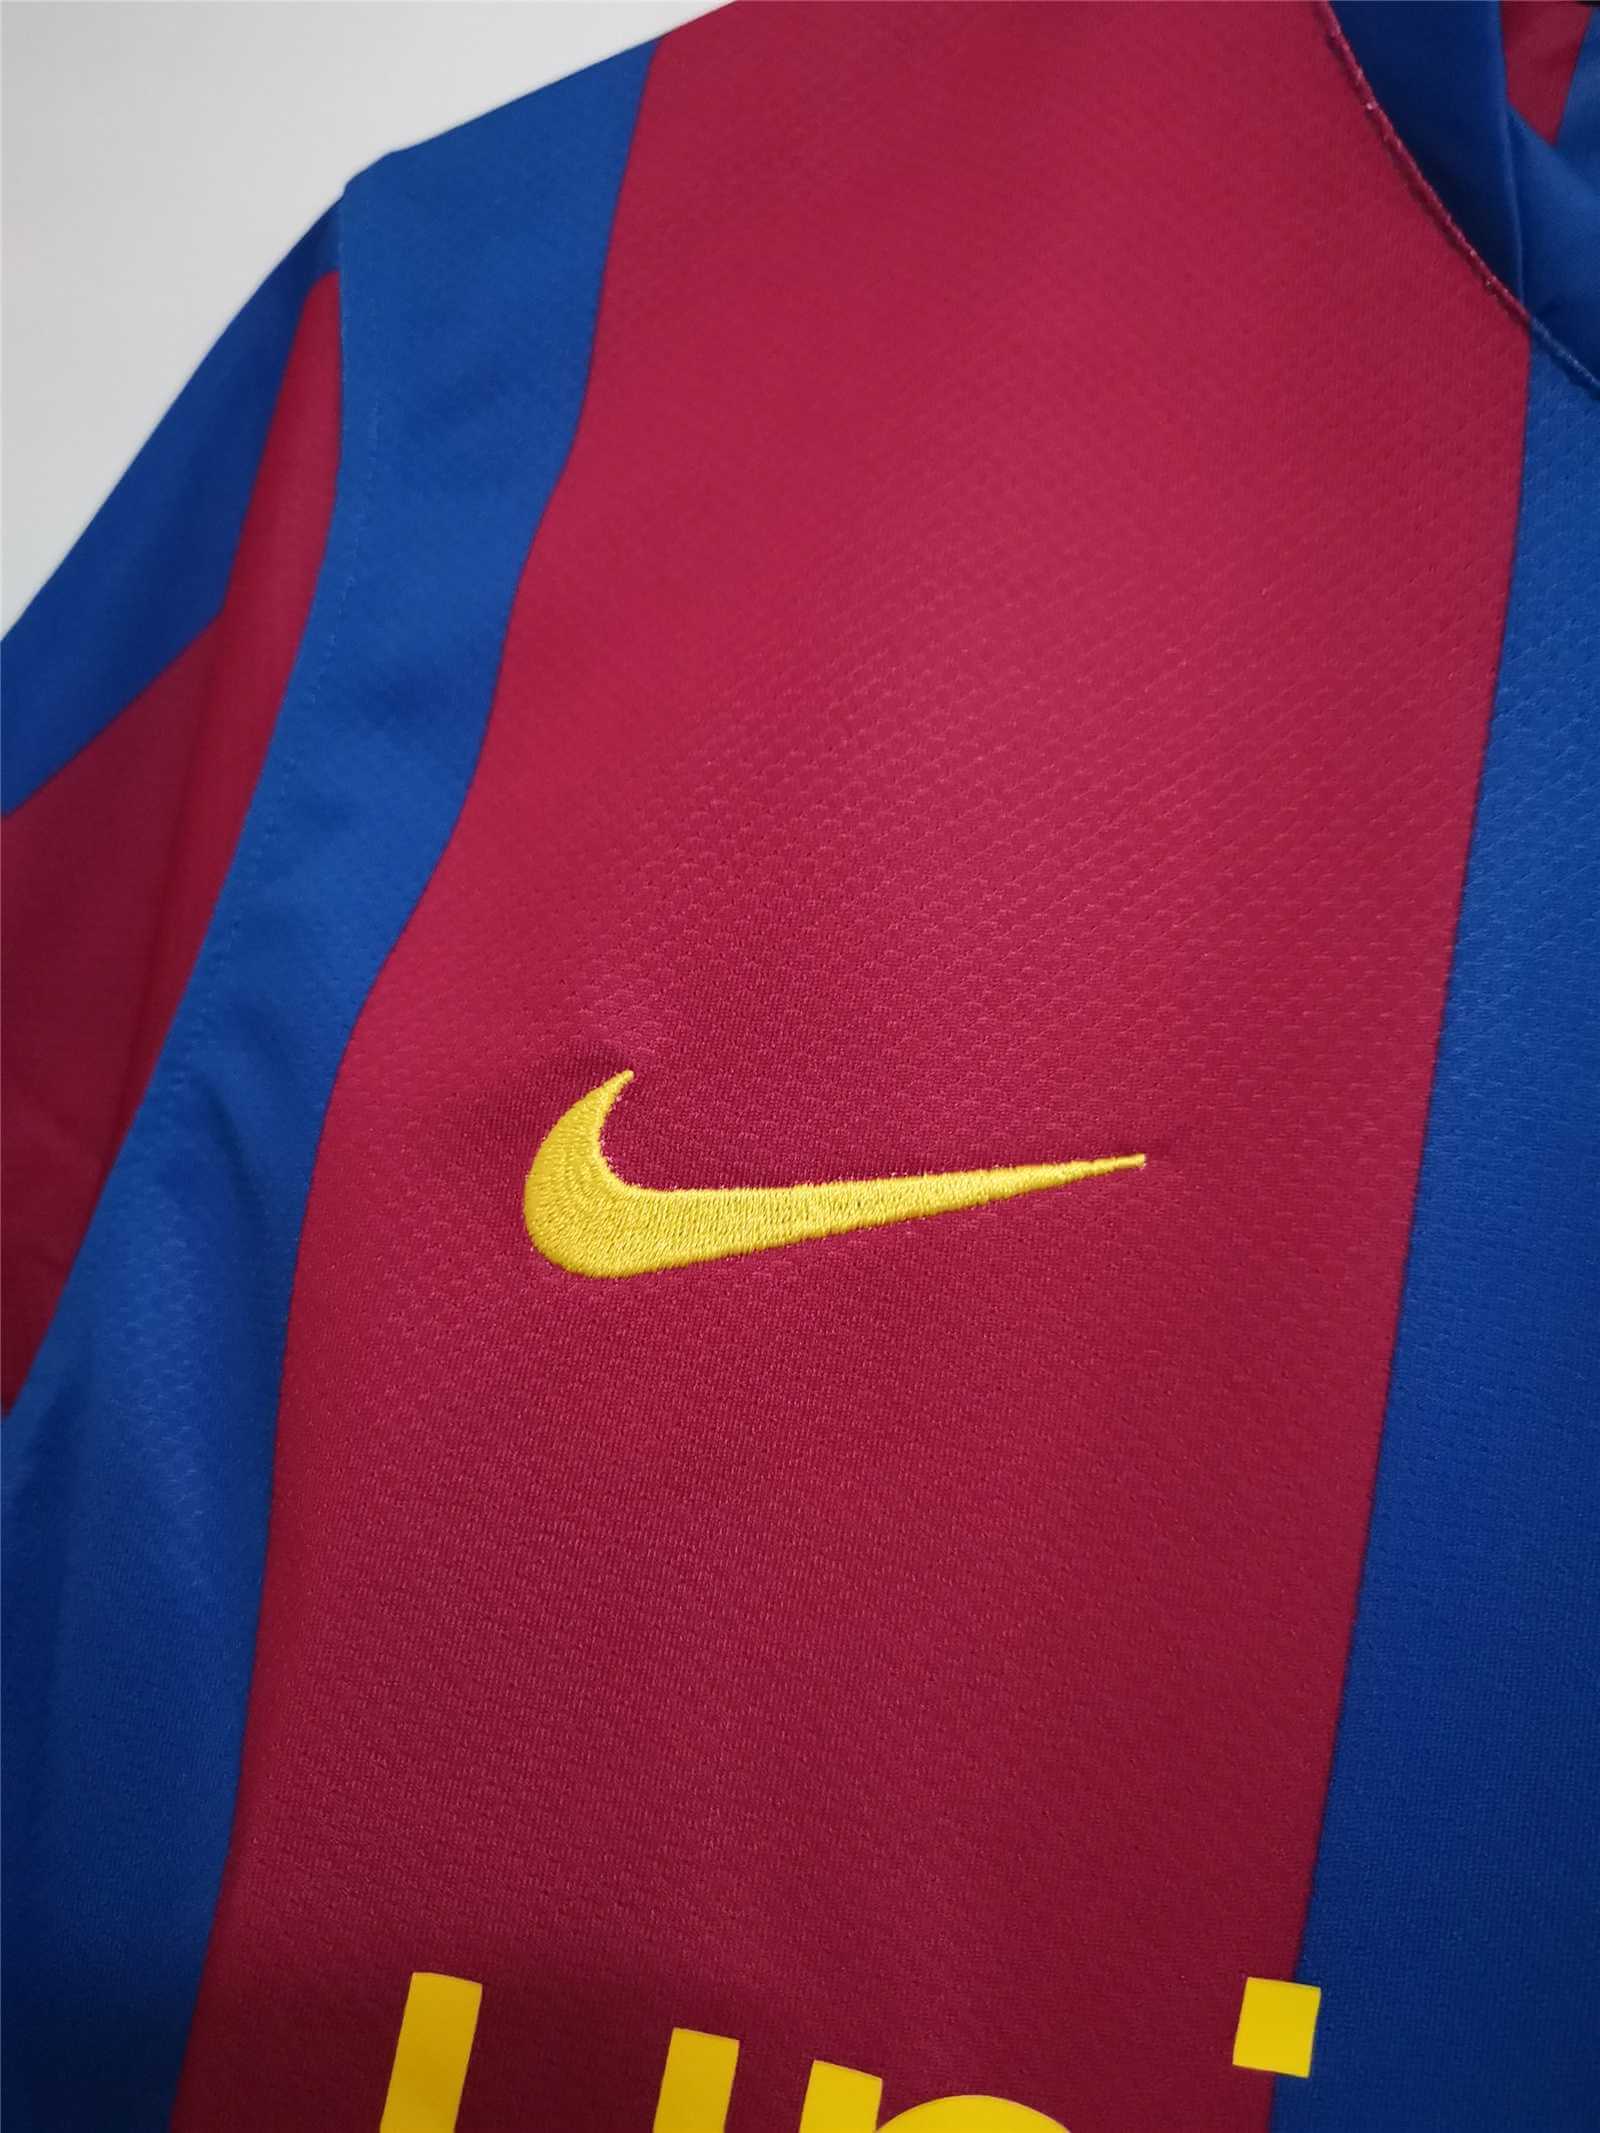 FC Barcelona 2007/2008 Home Kit – The Football Heritage